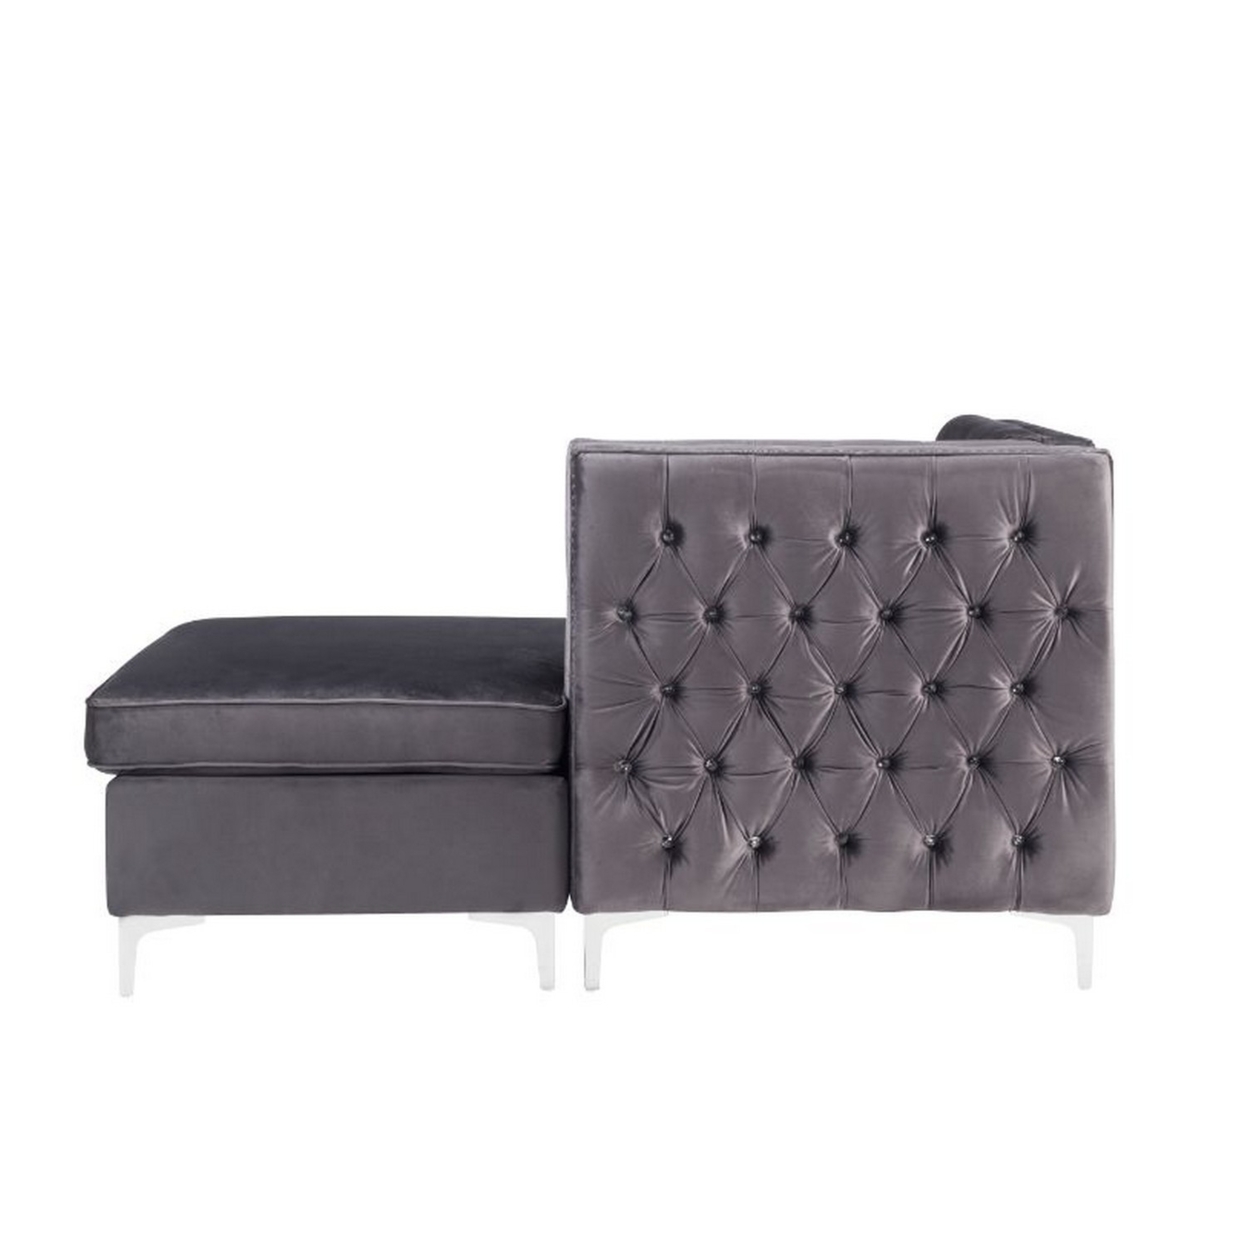 Chaise With Velvet Upholstery And Metal Legs, Gray- Saltoro Sherpi